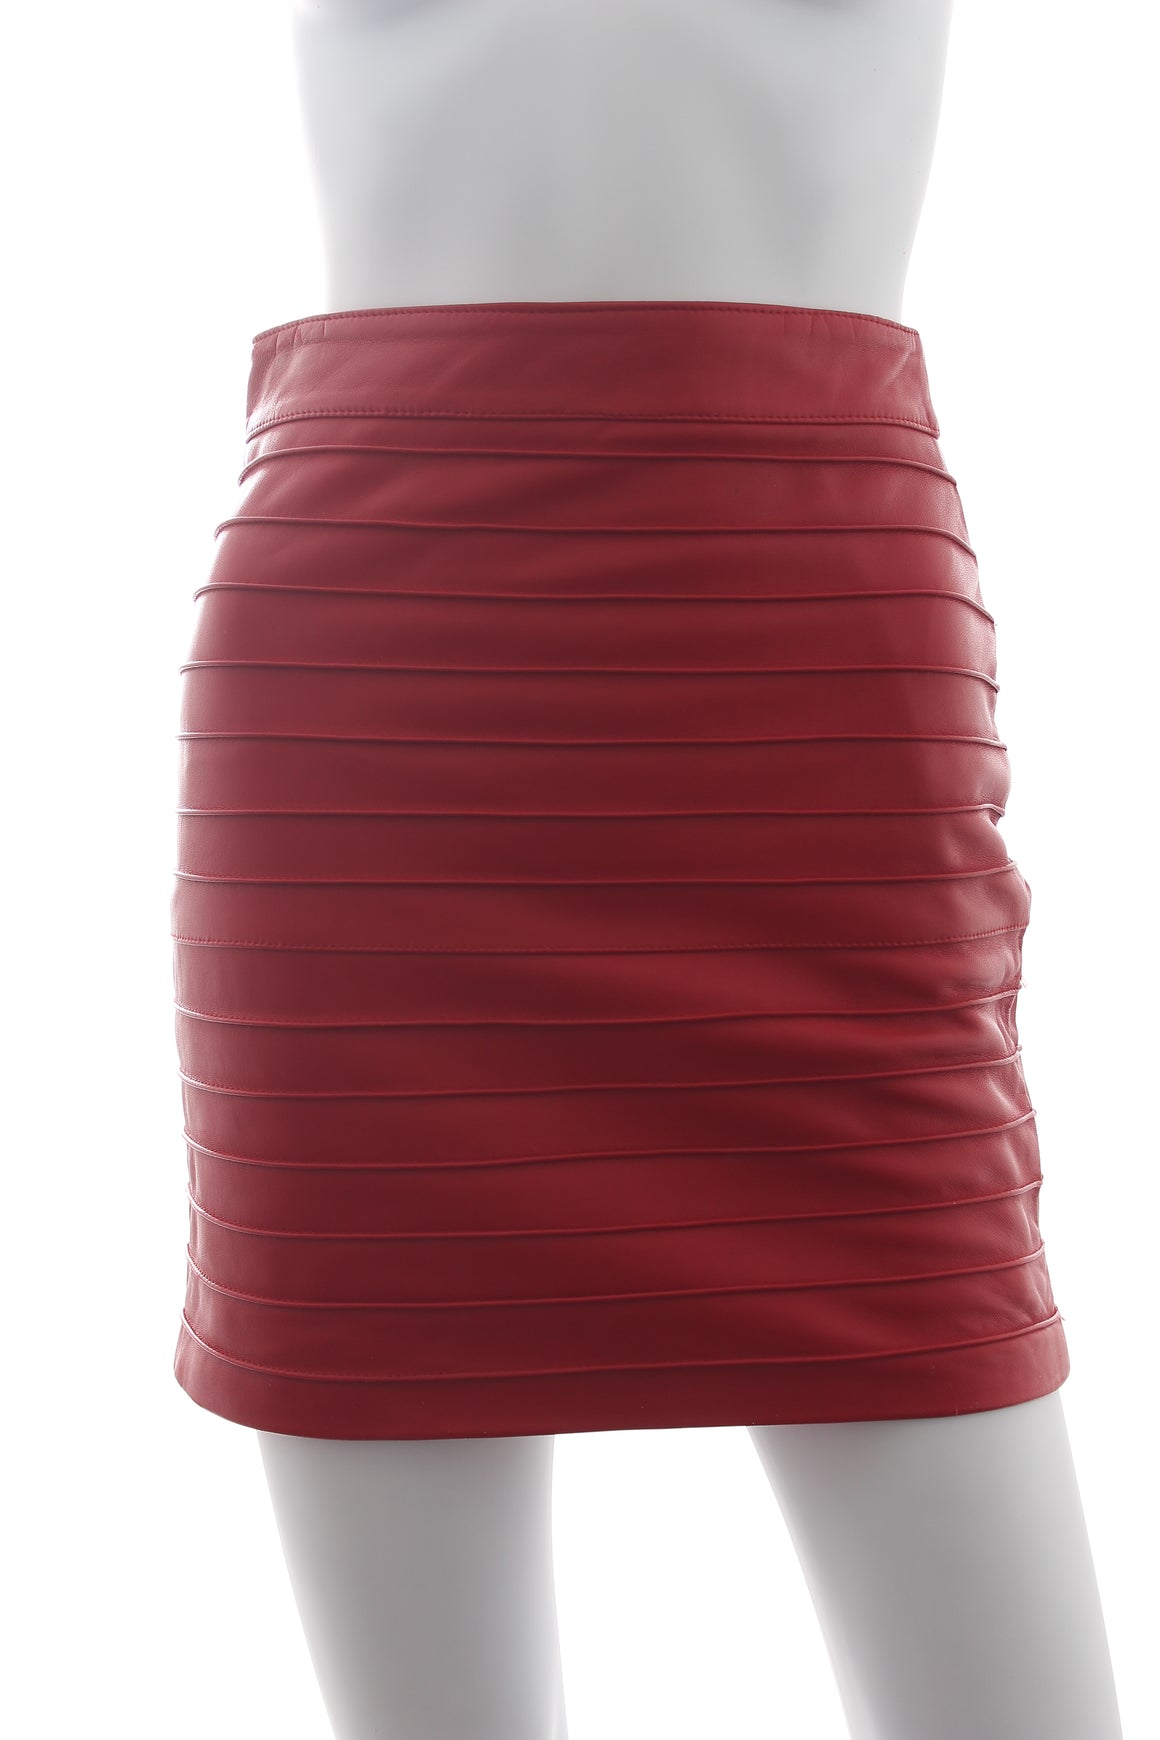 Alessandra Rich High-Waisted Leather Mini Skirt